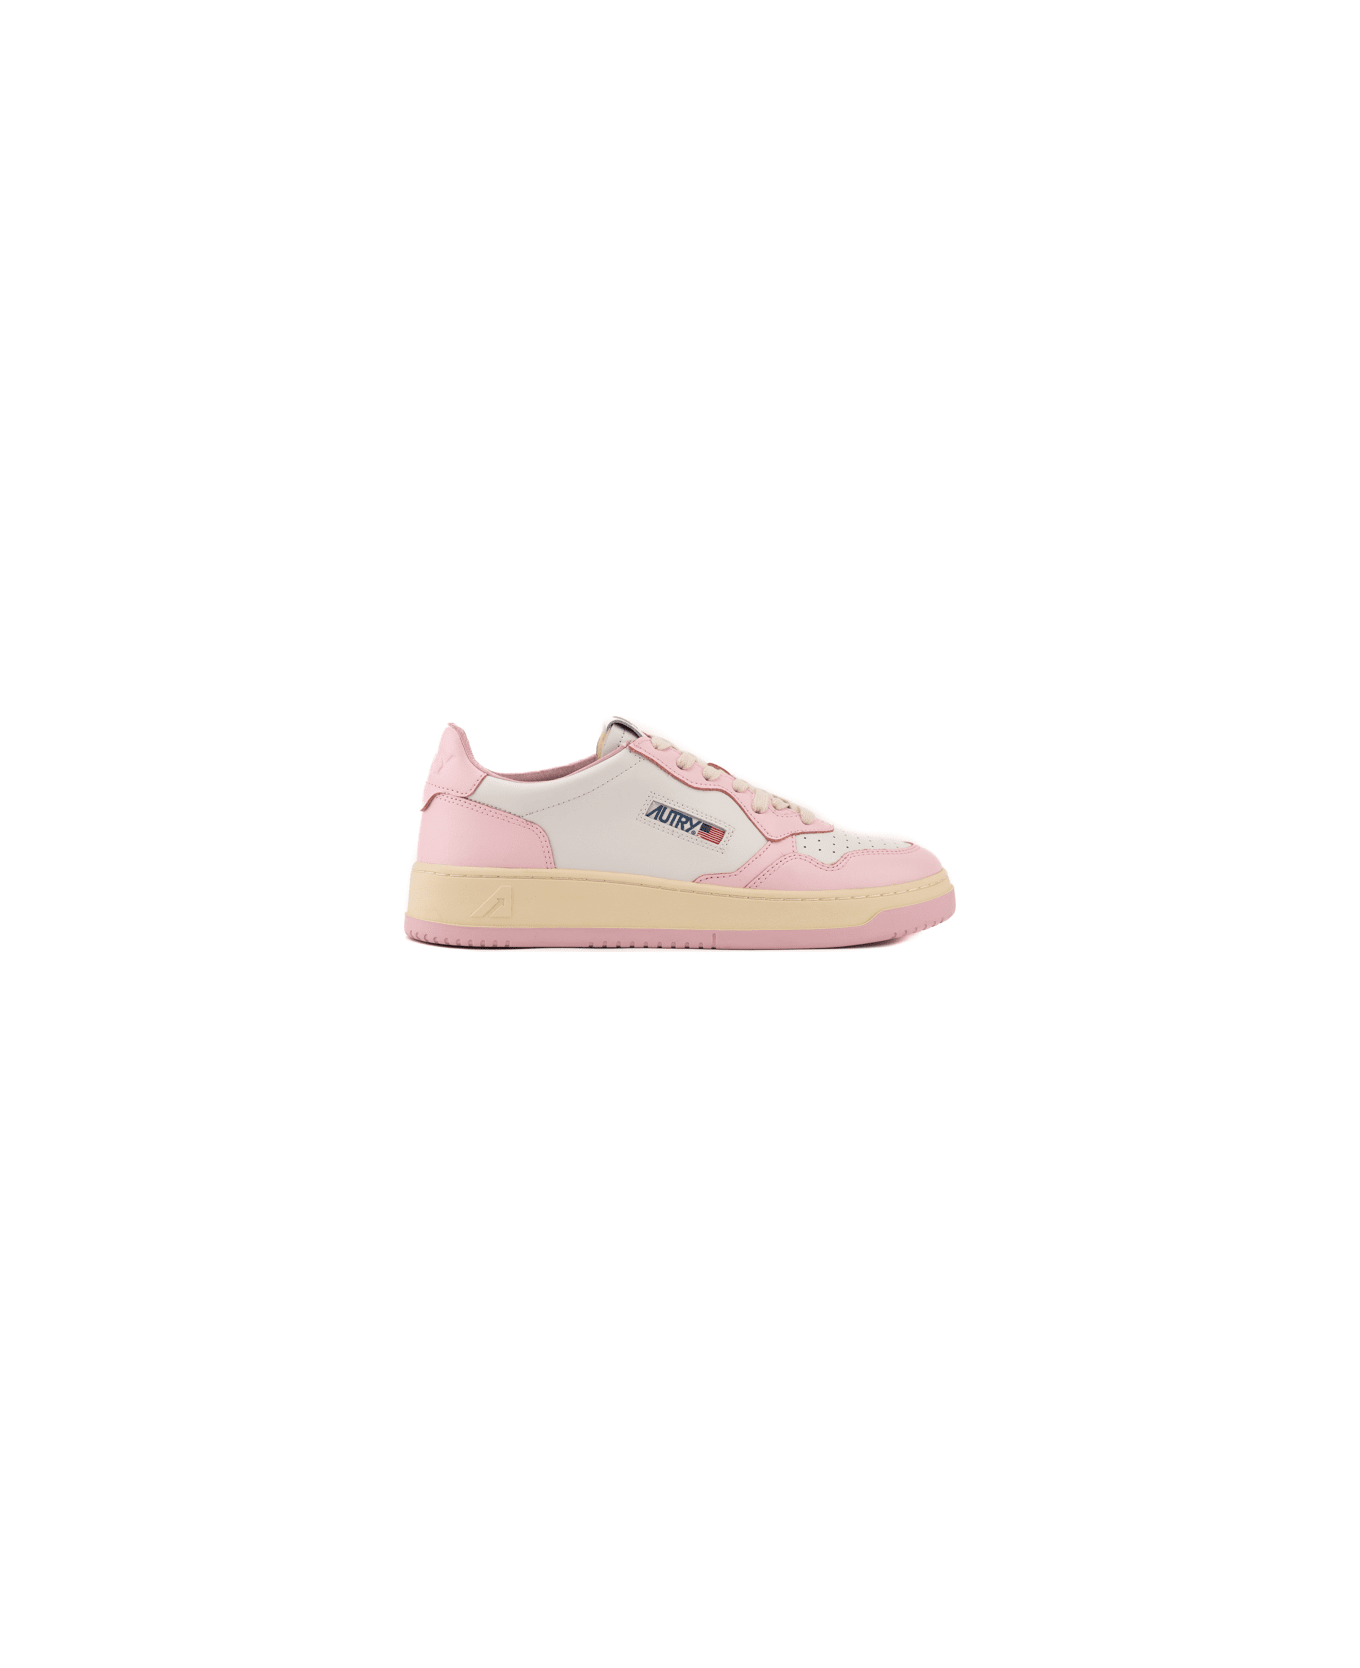 Autry Medialist Low Sneakers - Wht/pink